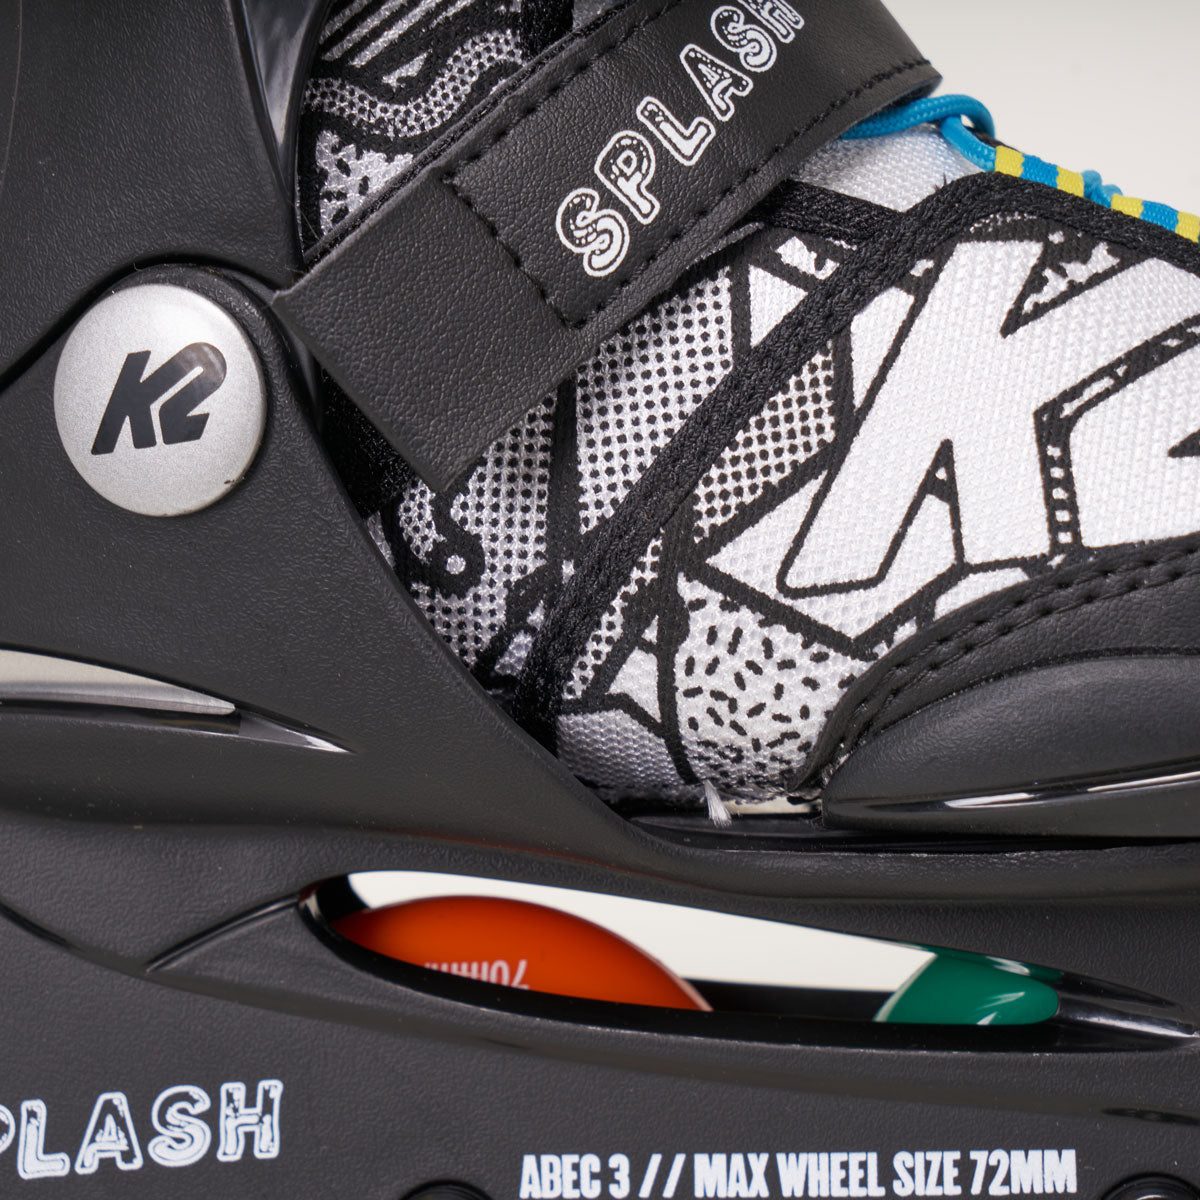 K2 Splash Junior Adjustable Inline Skates - Unisex